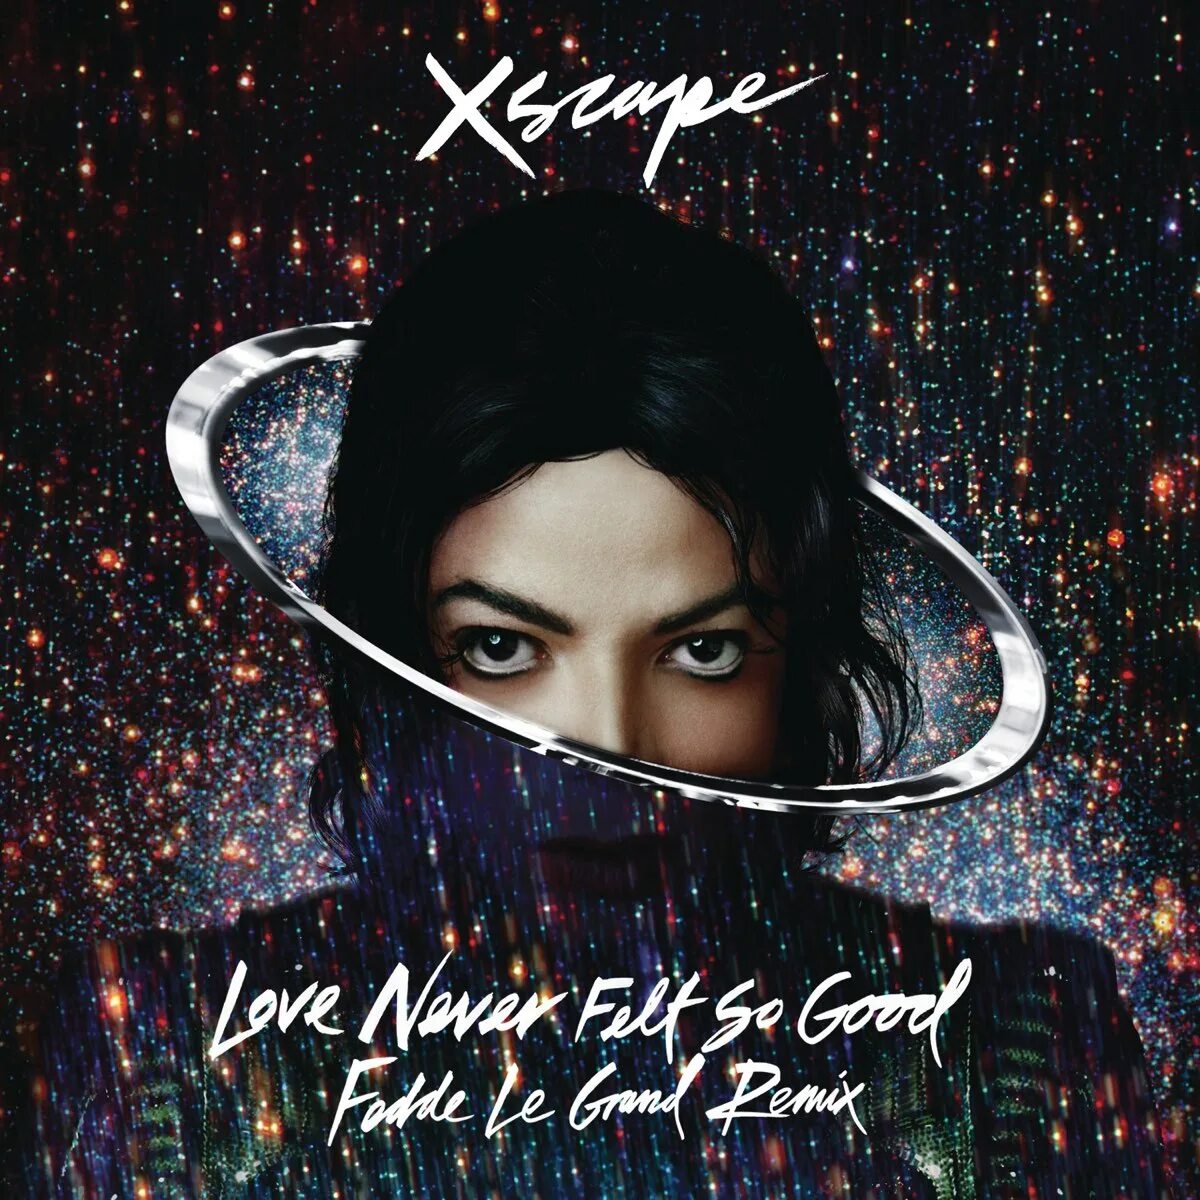 Michael jackson feeling. Michael Jackson Love never felt so good. Love never felt so good от Michael Jackson.